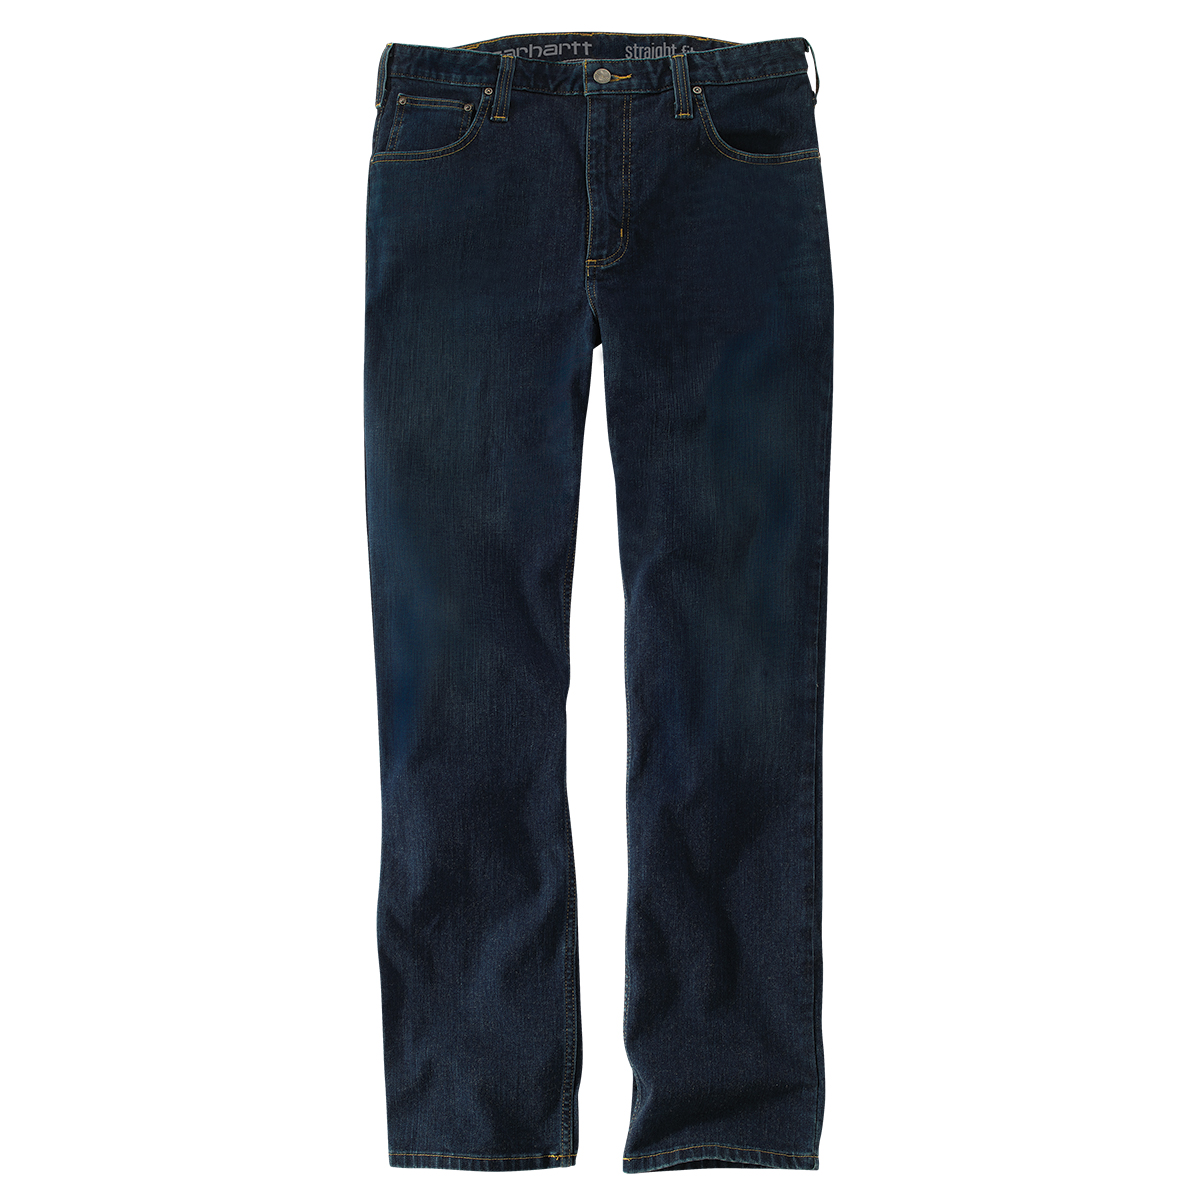 Carhartt Men's 102807 Rugged Flex Straight Fit 5-Pocket Tapered Jeans, Blue